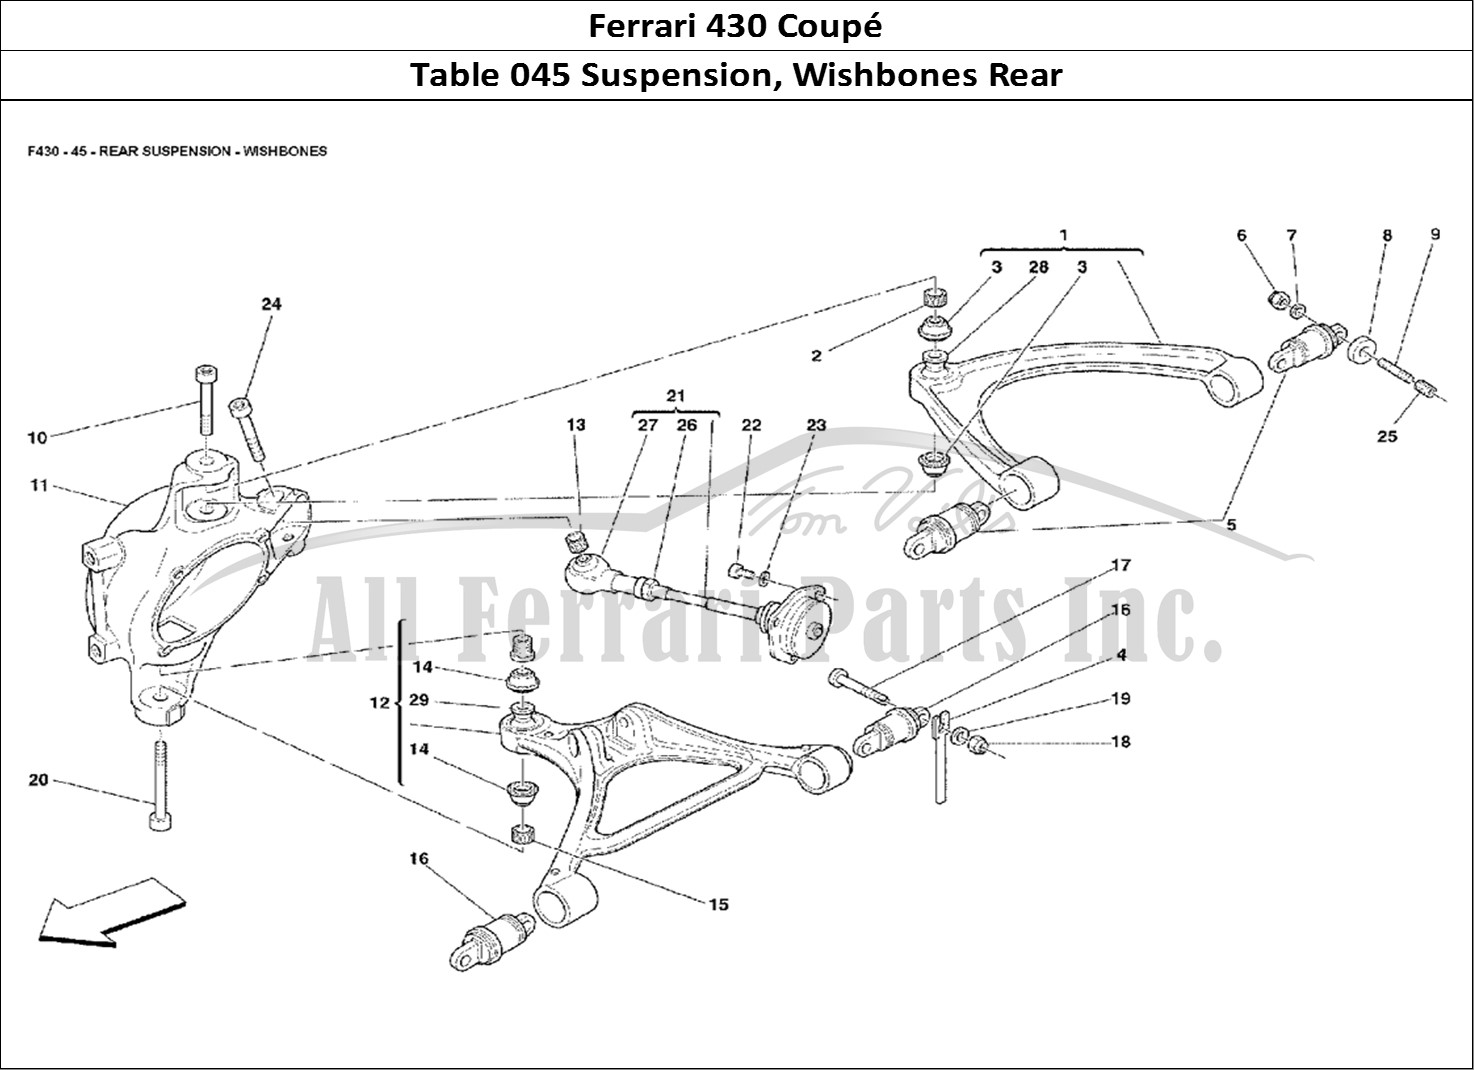 Ferrari Parts Ferrari 430 Coup Page 045 Rear Suspension - Wishbon